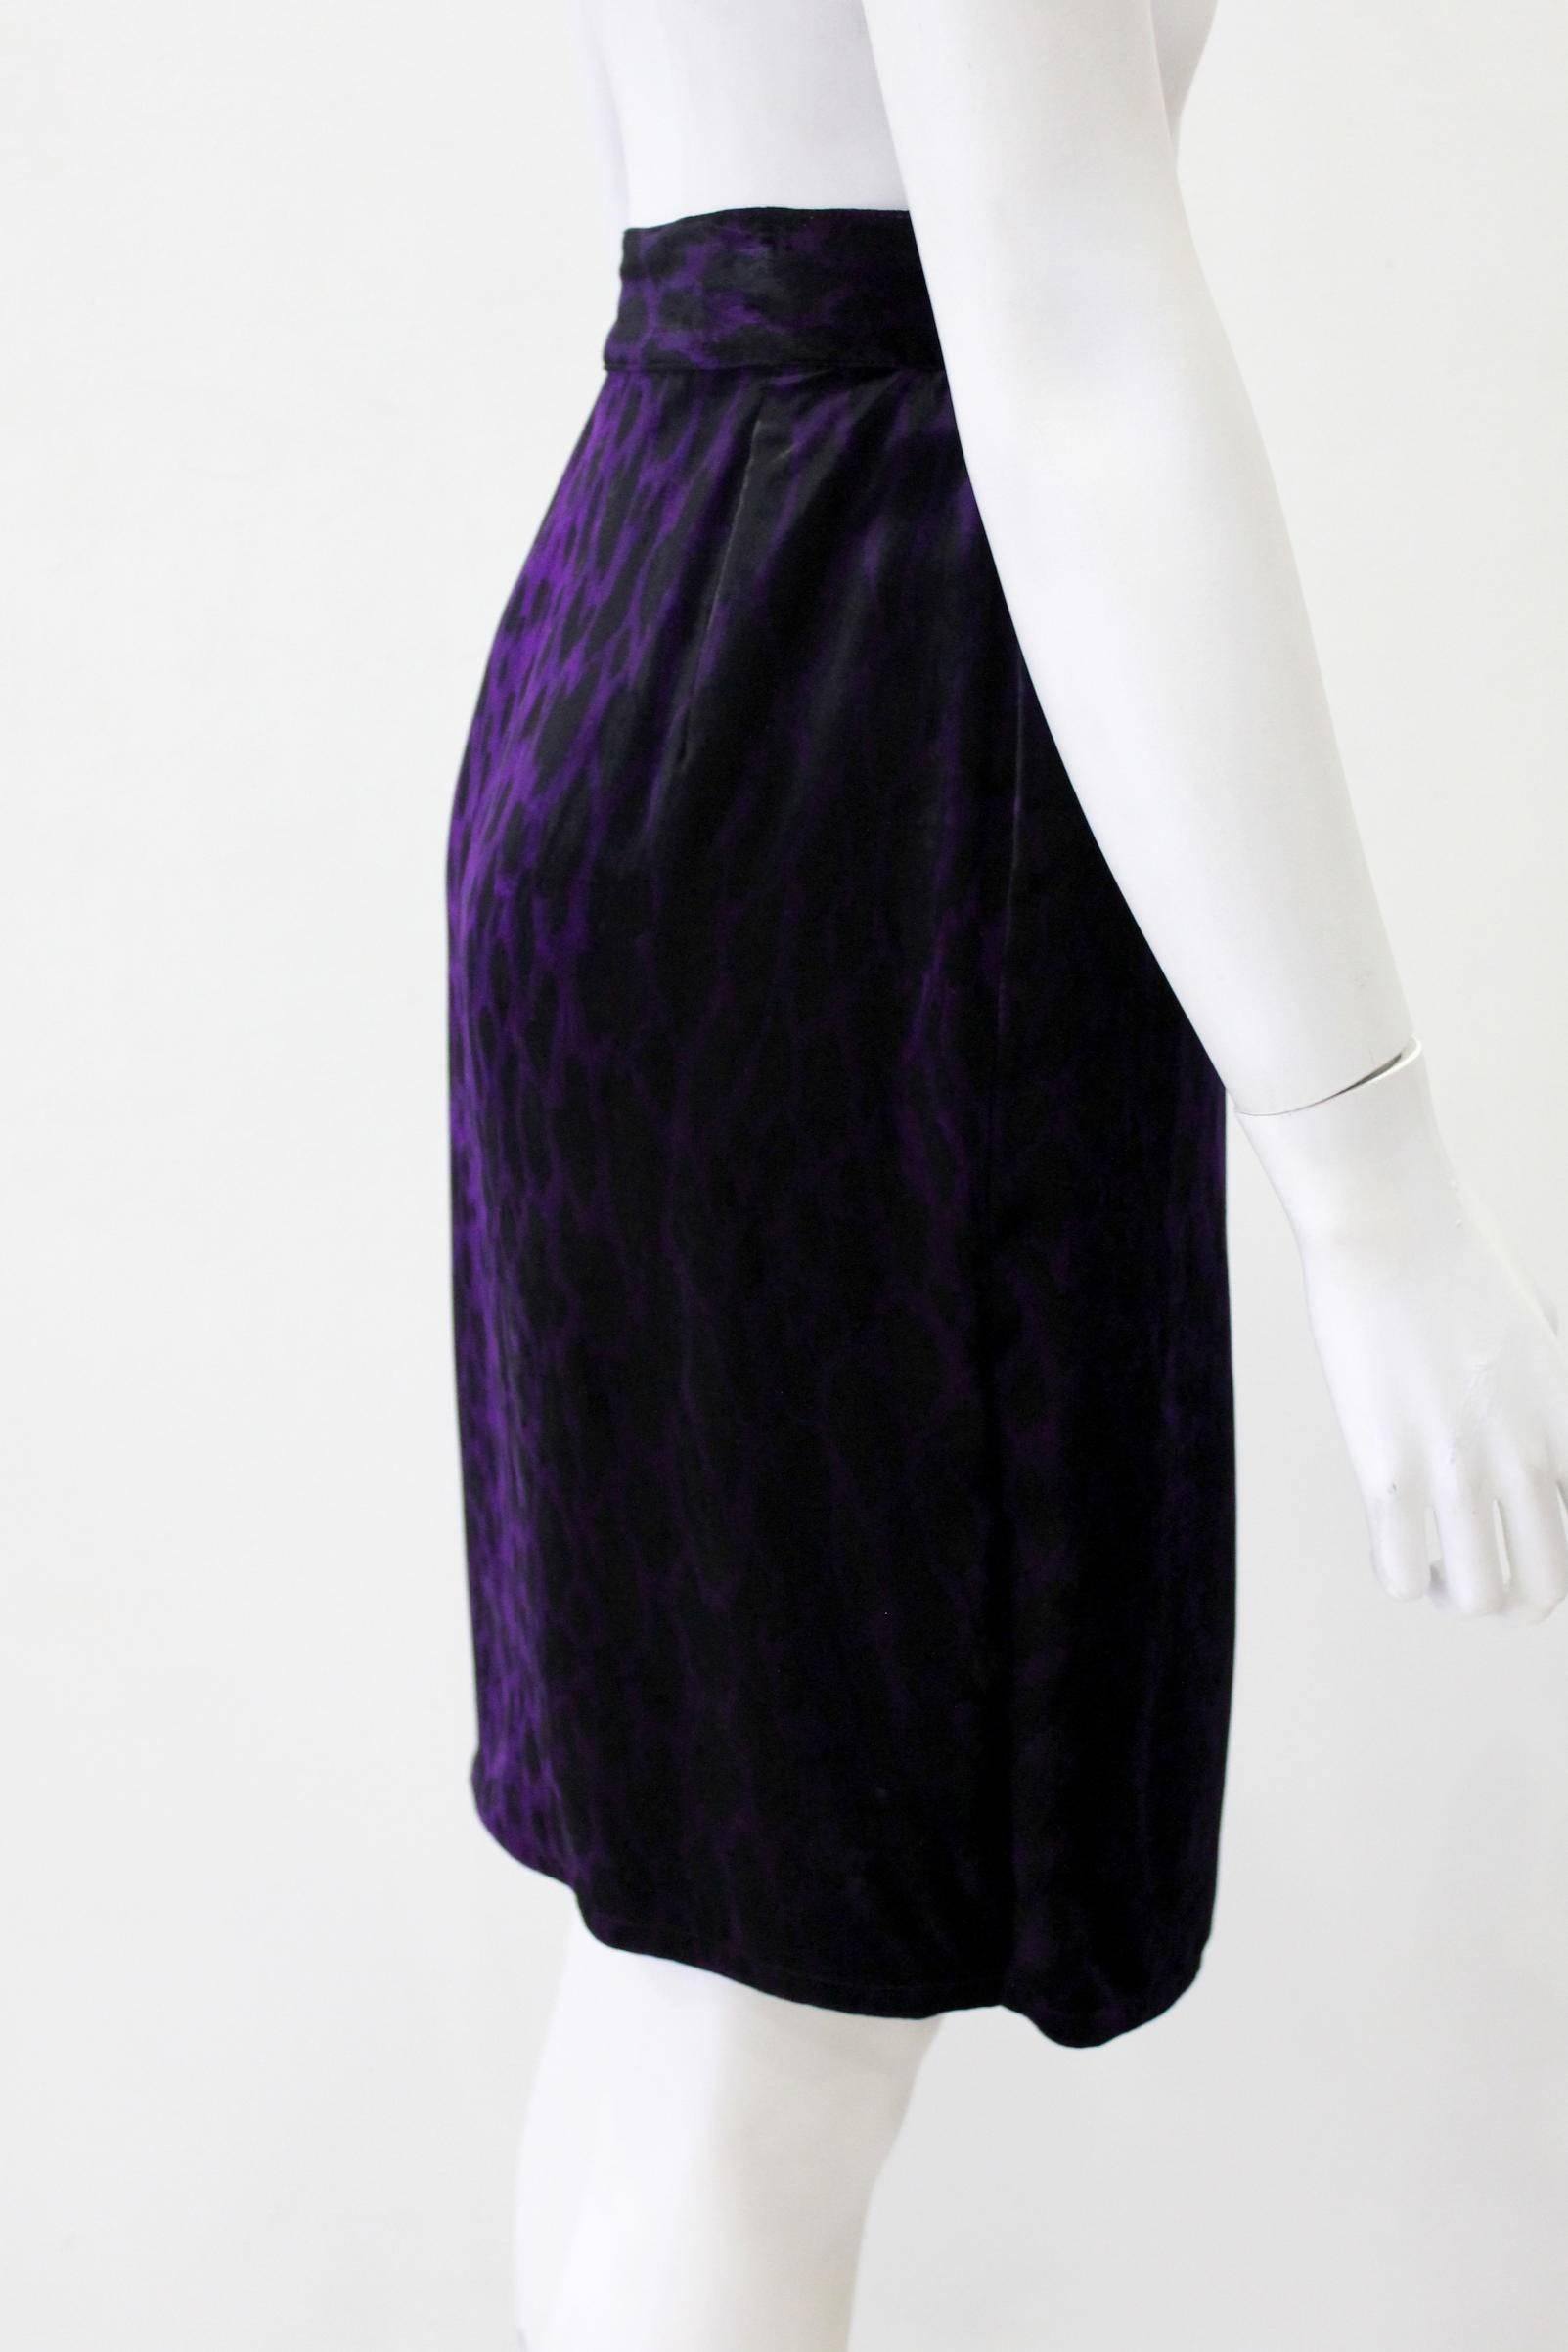 Black Unique Gianni Versace Couture Velvet Leopard Print Skirt Fall 1989 For Sale